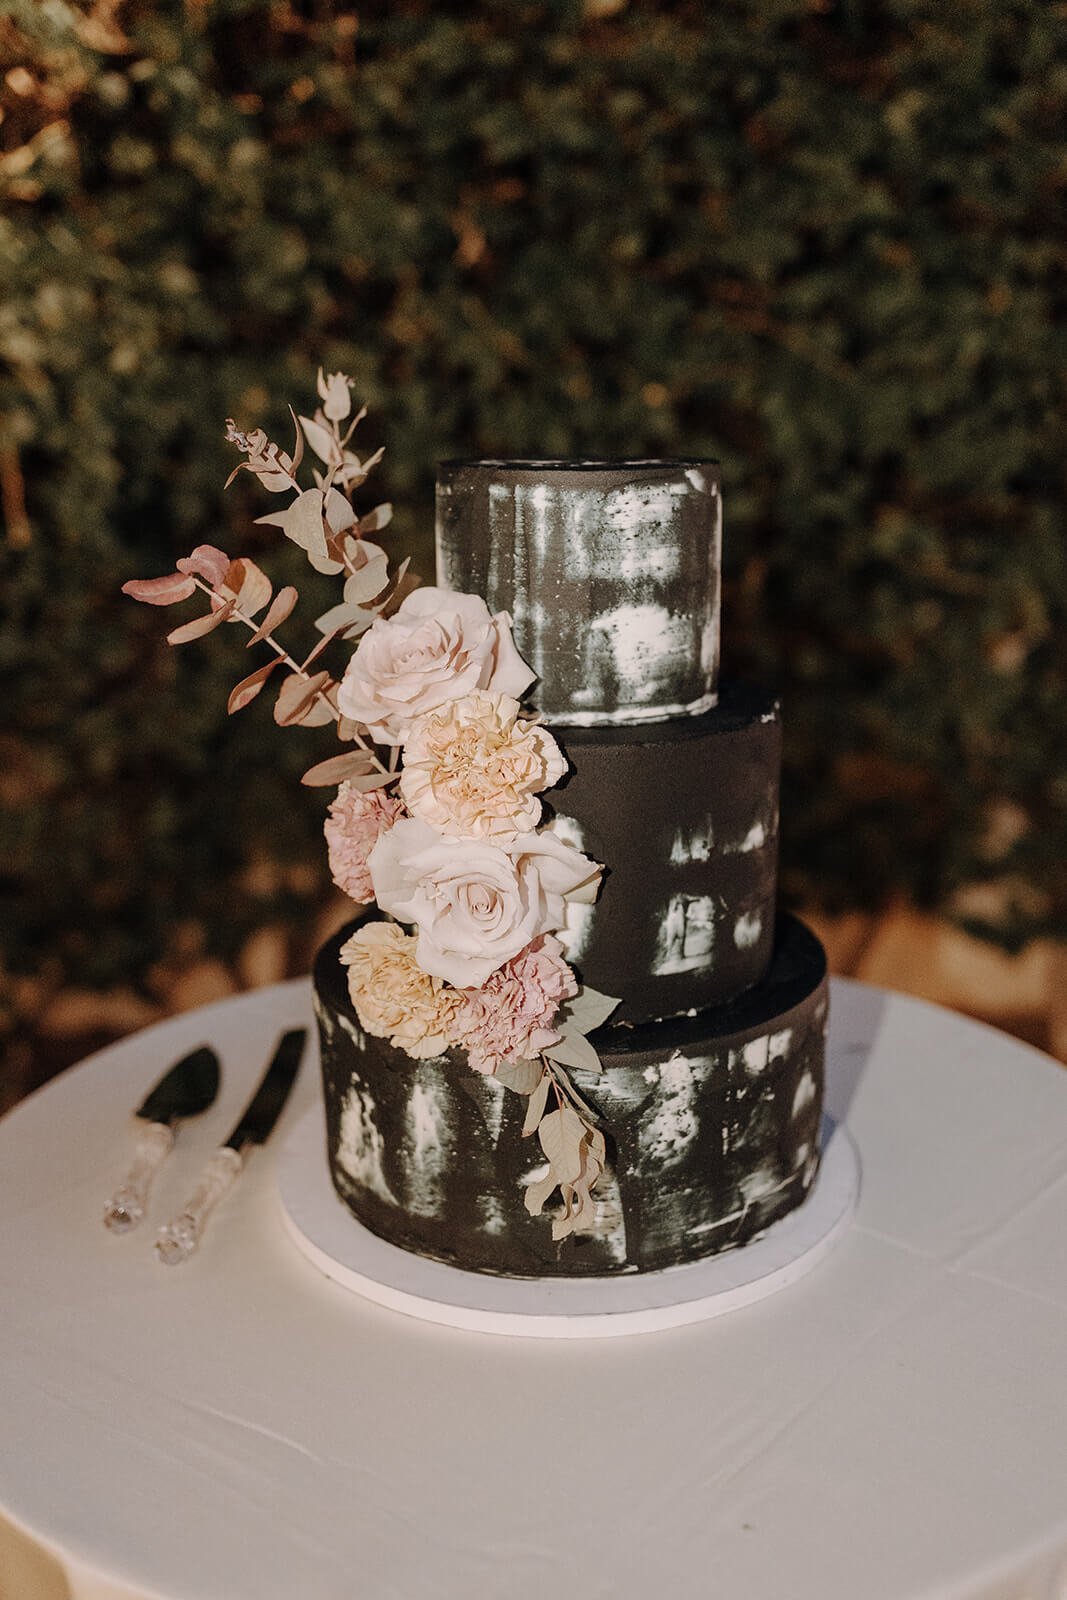 Three-tiered black wedding cake with blush pink floral arrangement